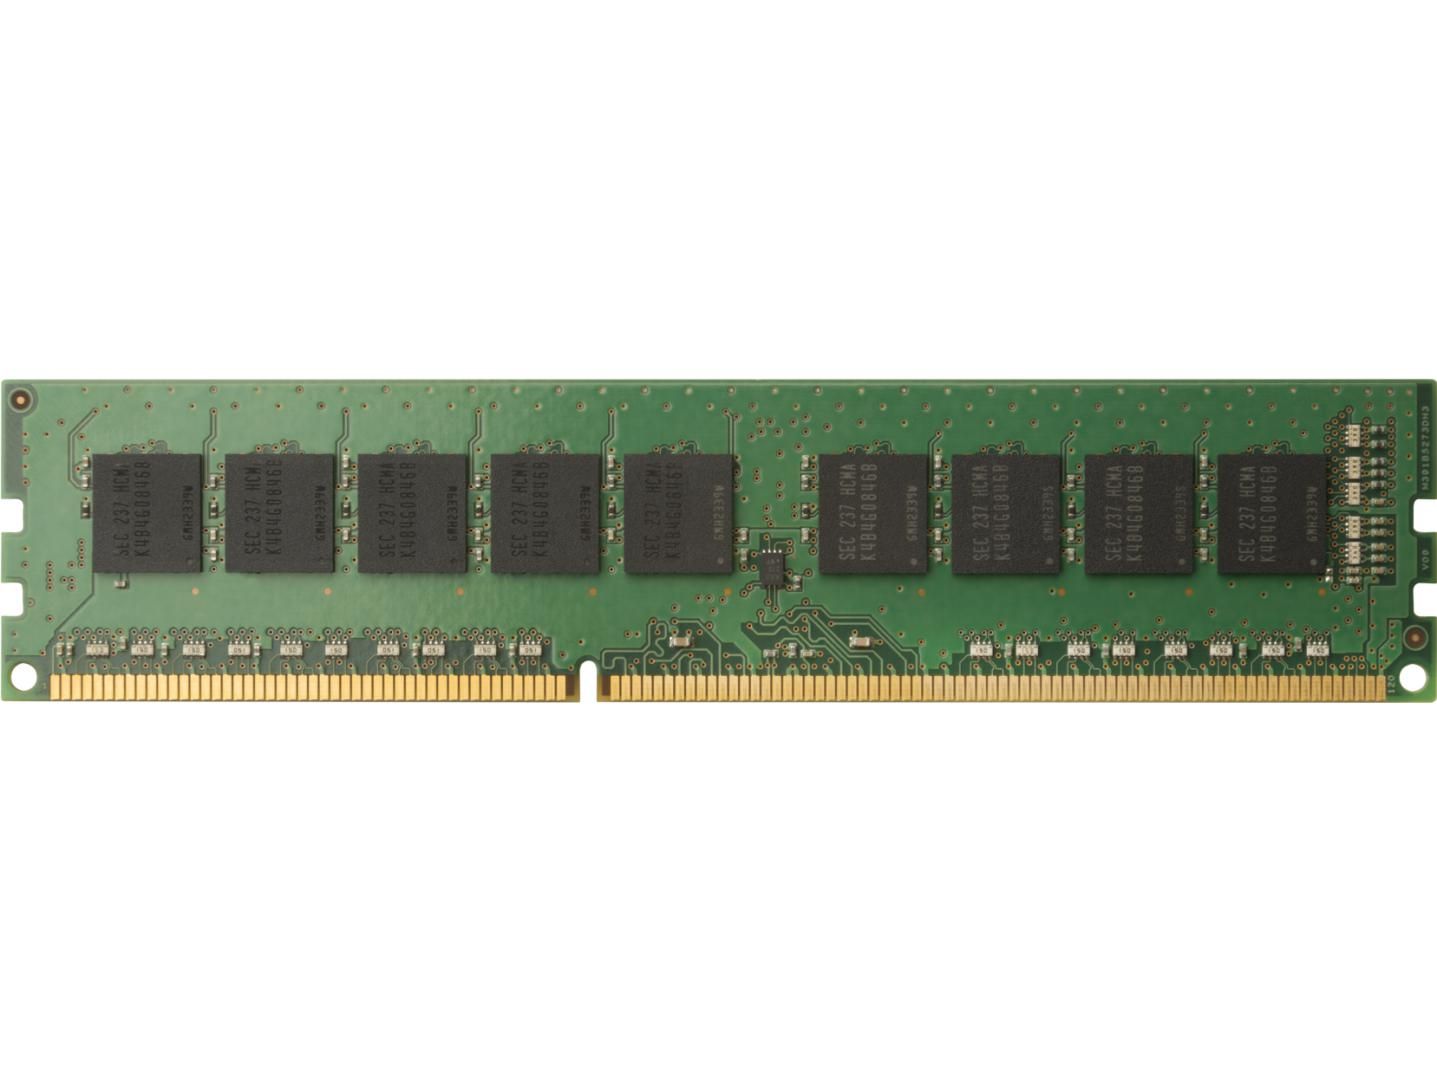 HP MEMORIE RAM DDR4 3200 UDIMM 16GB